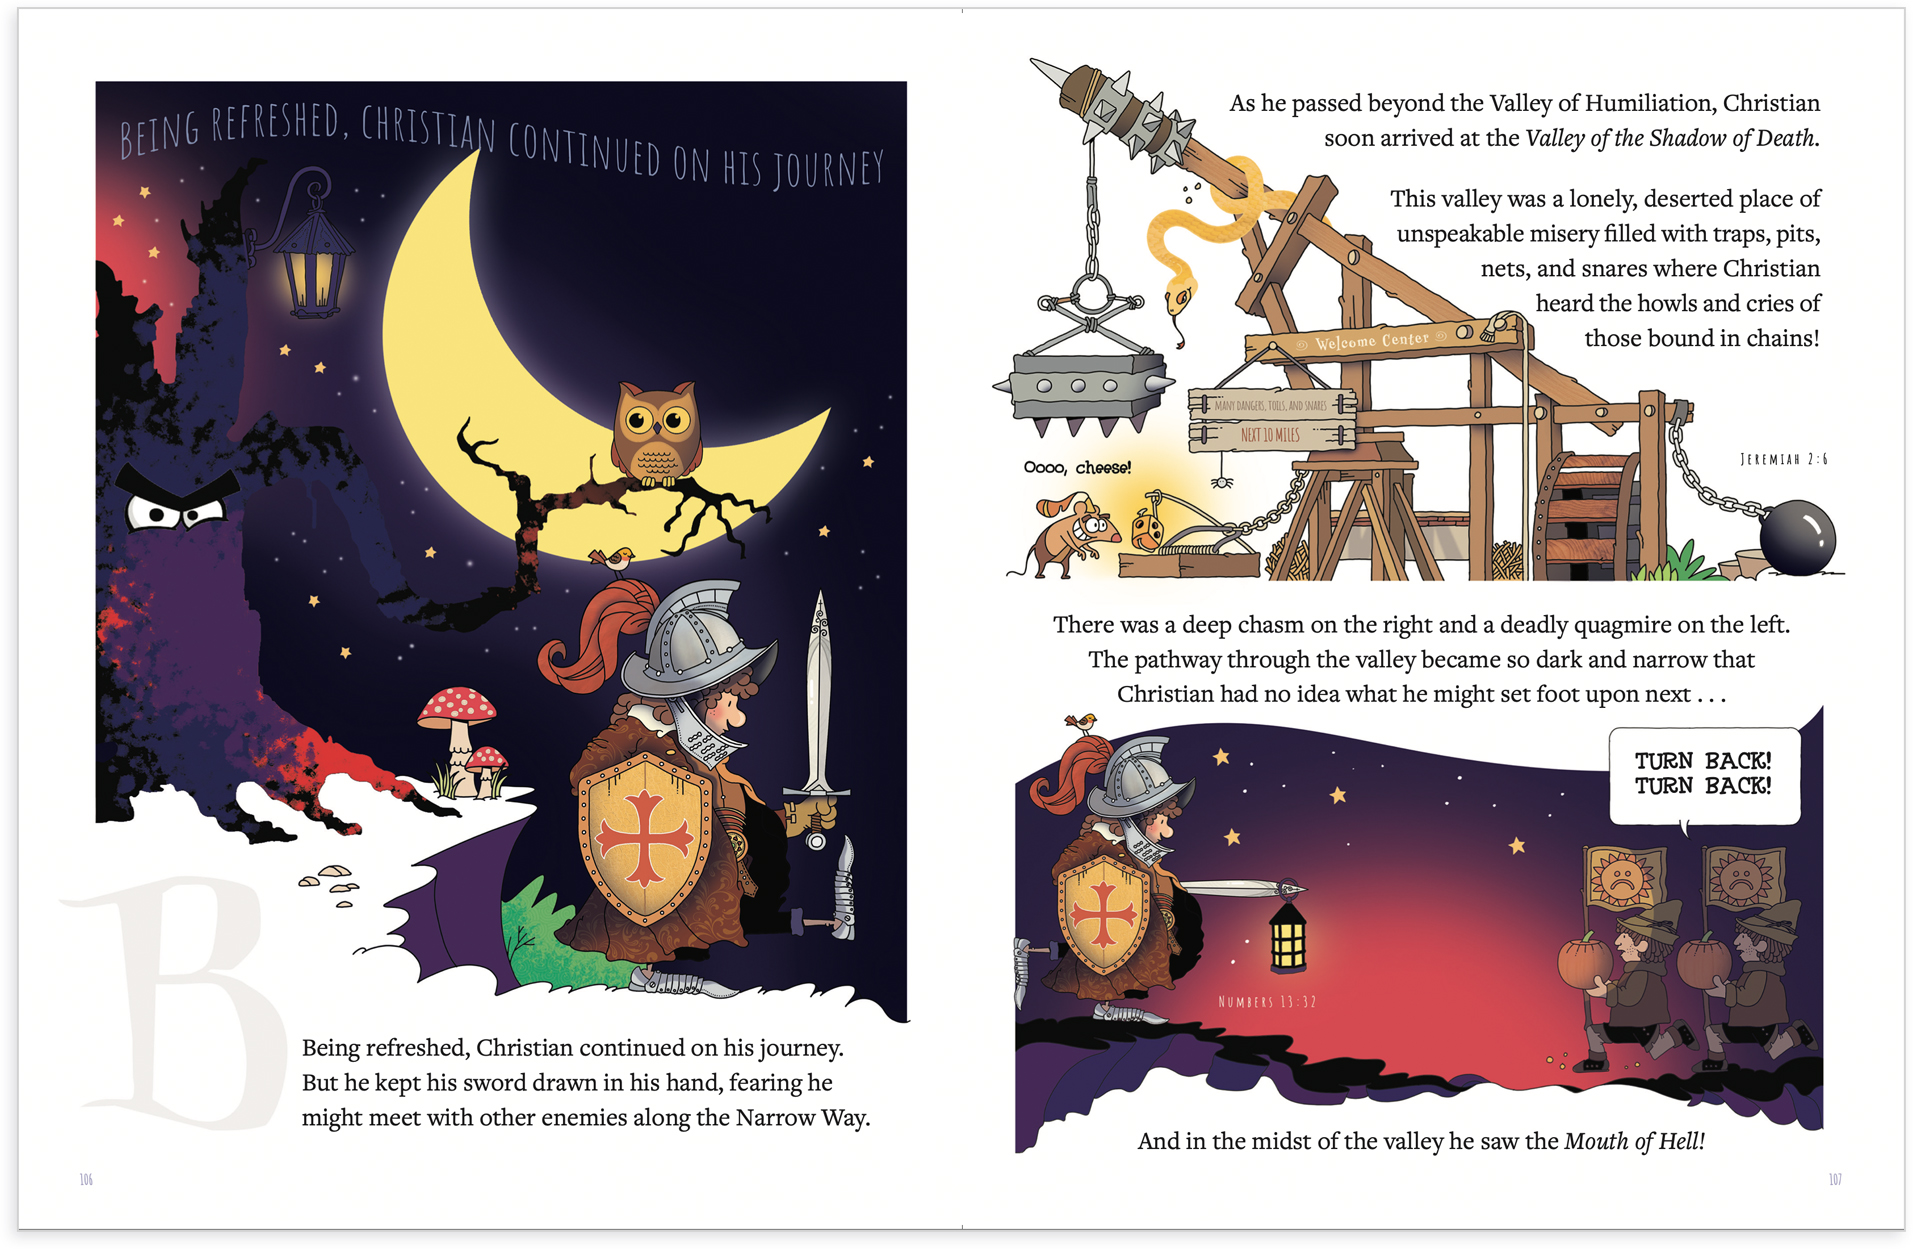 Pilgrim's Progress Illustrated Adventure for Kids - Phil A. Smouse